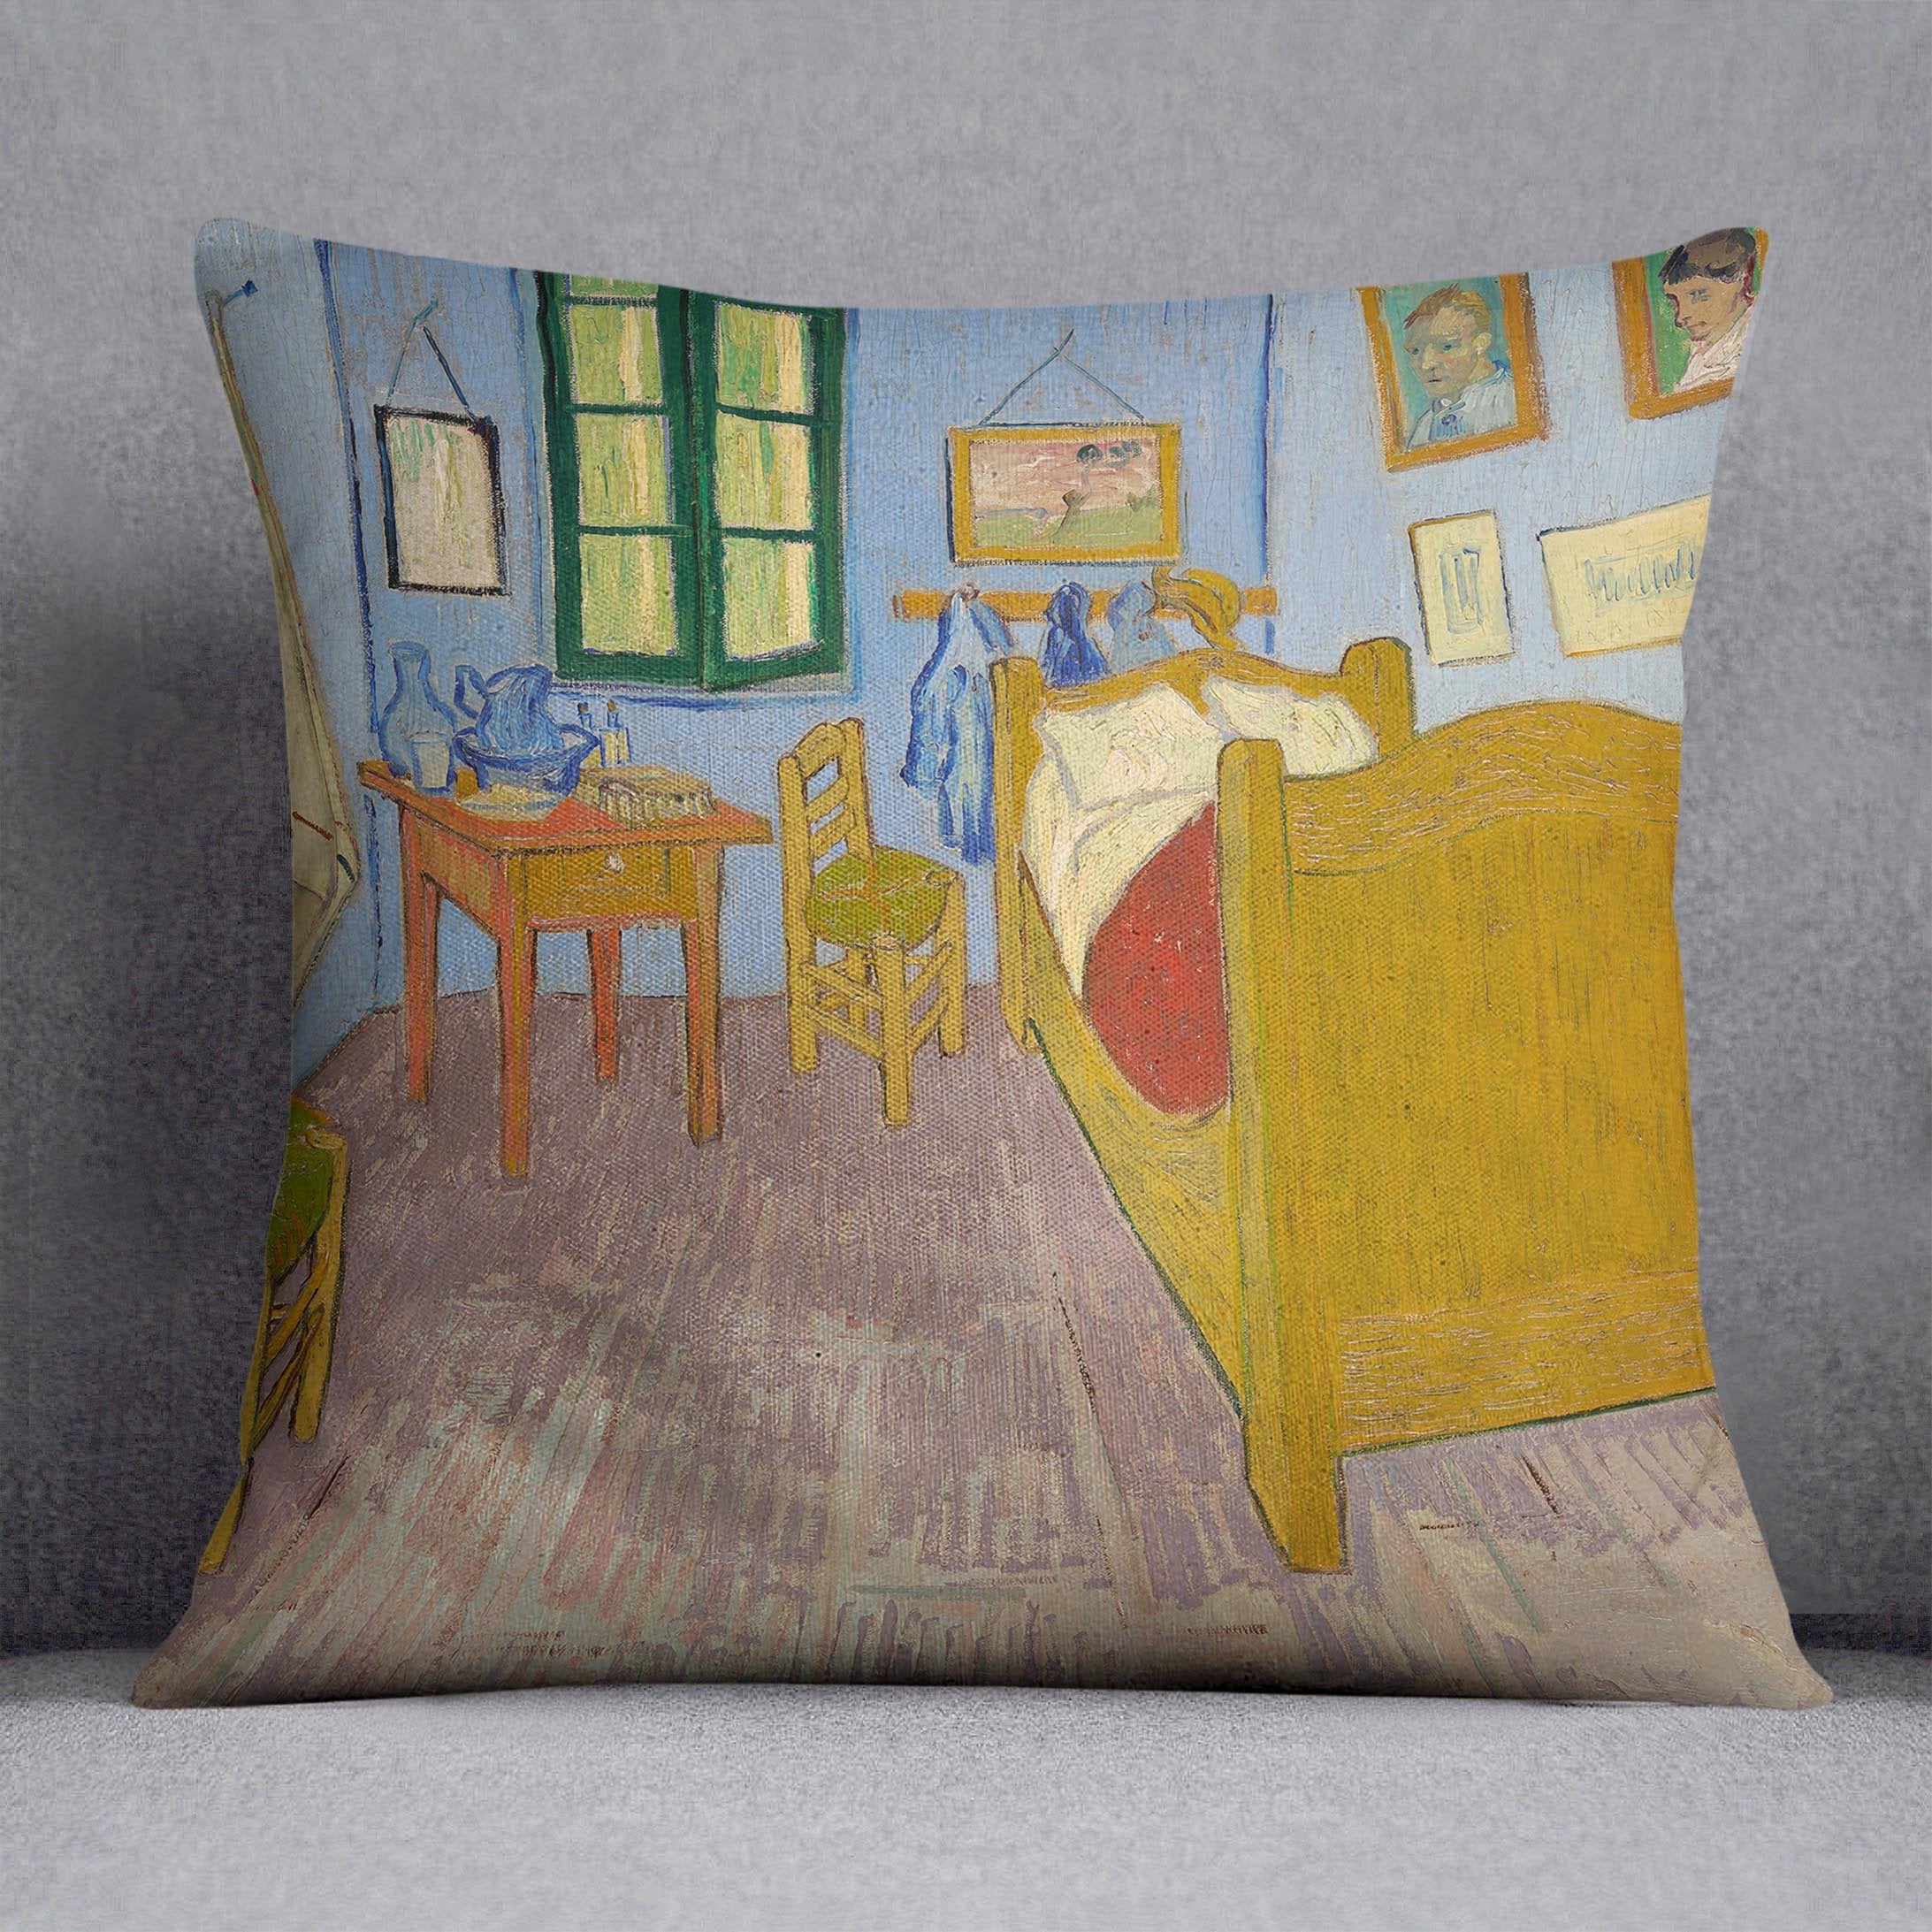 Vincents bedroom at Arles Throw Pillow